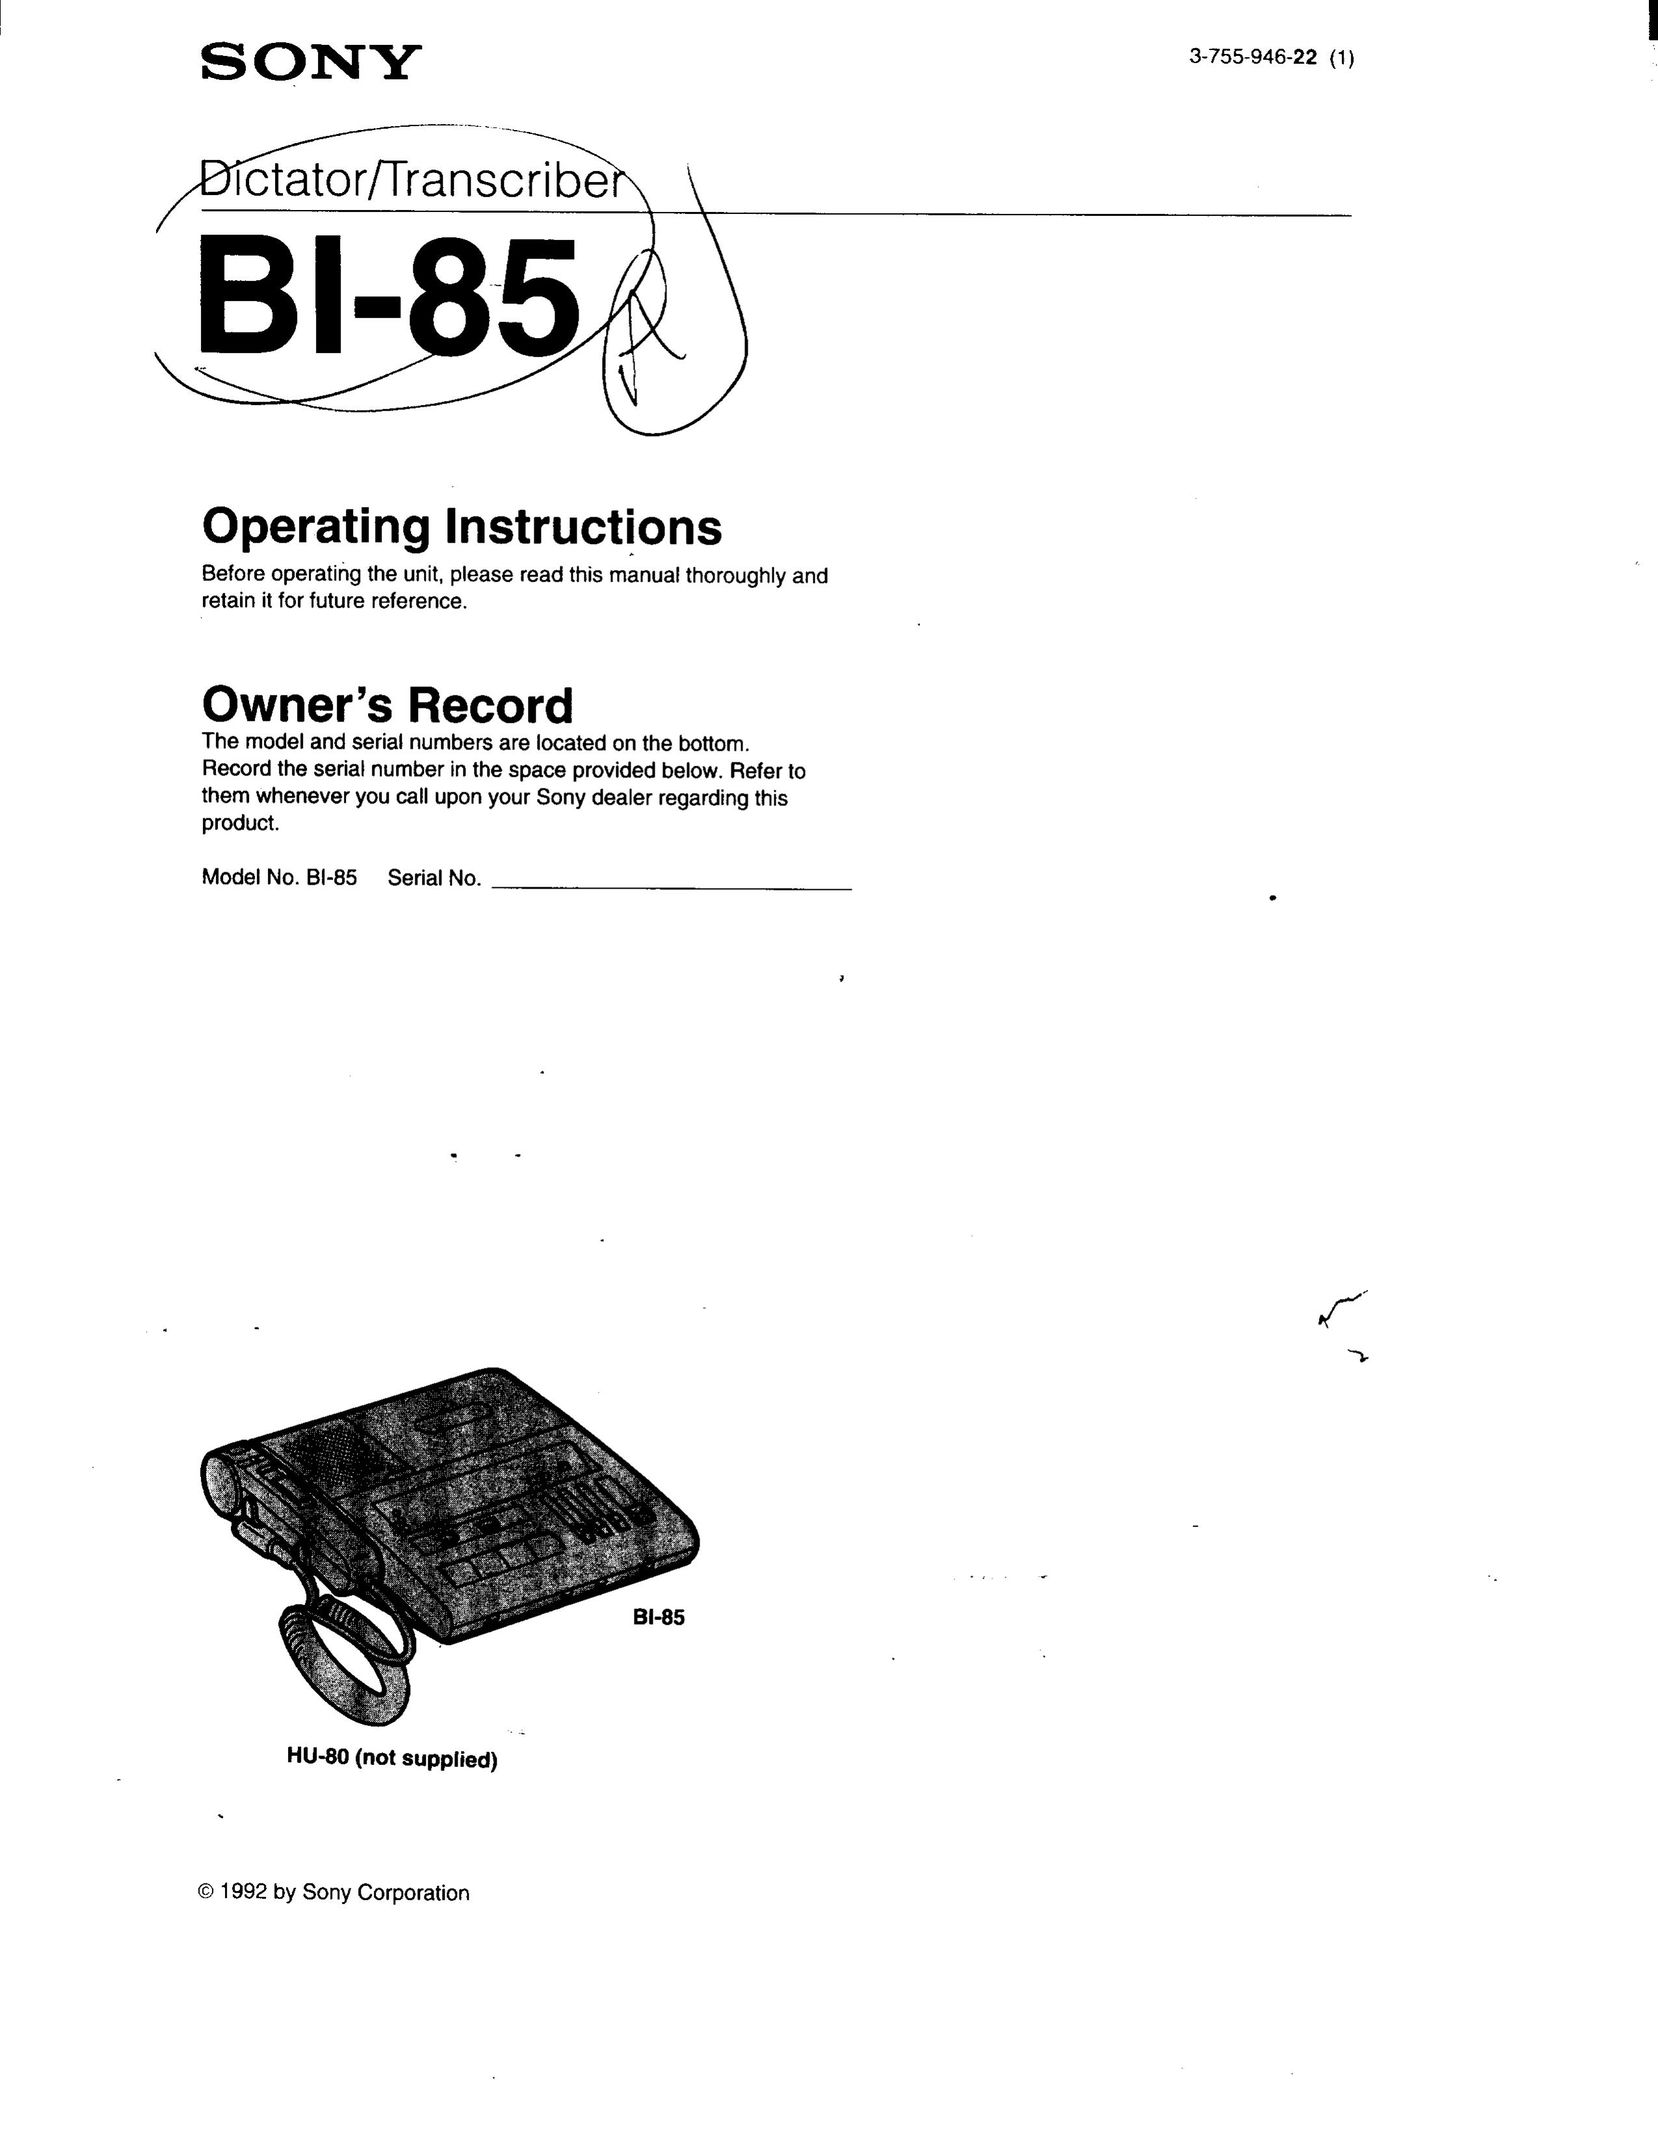 Sony BI-85 Microcassette Recorder User Manual